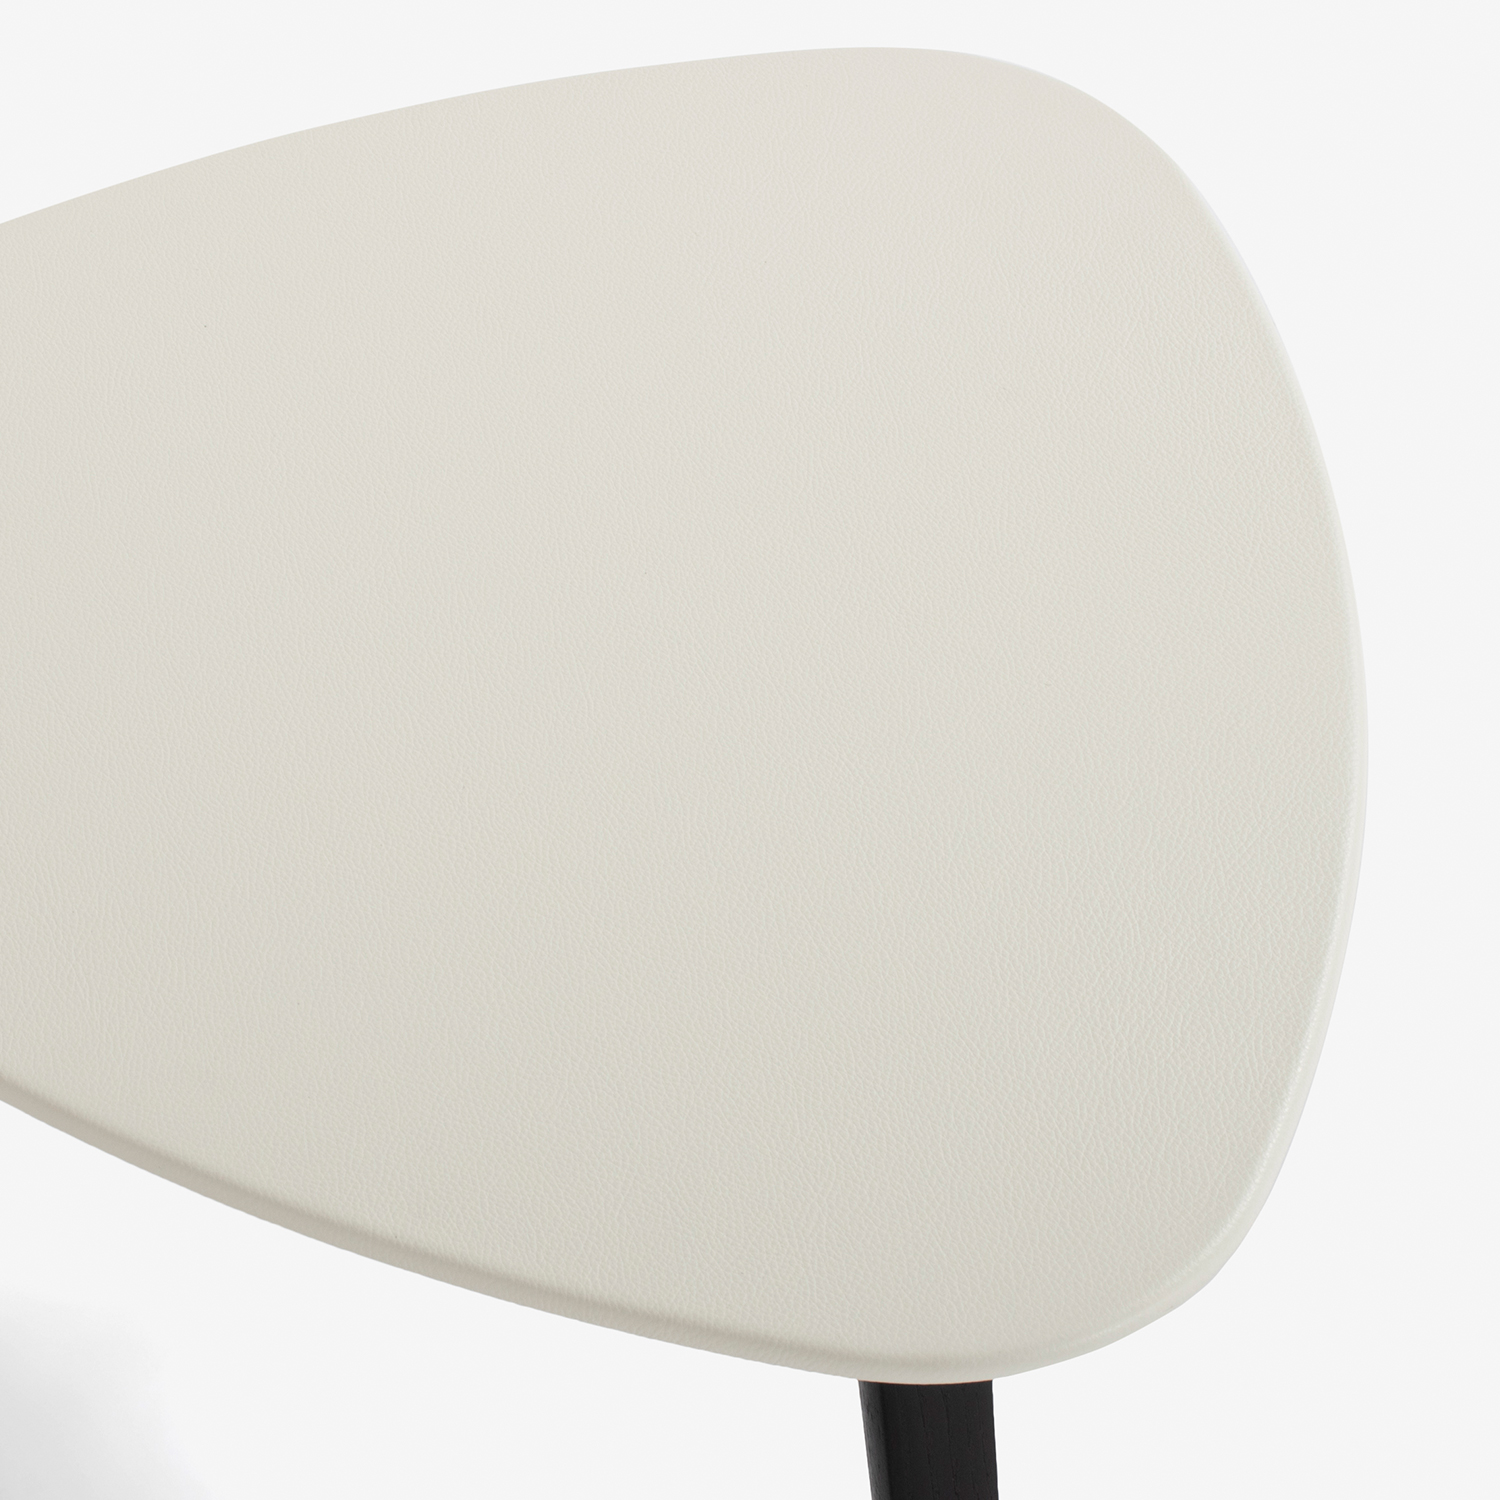 PoltronaFrau（ポルトローナ・フラウ）サイドテーブル「フィオリーレ ロータイプ」アッシュ材ダークブラウン色 天板革ホワイト色